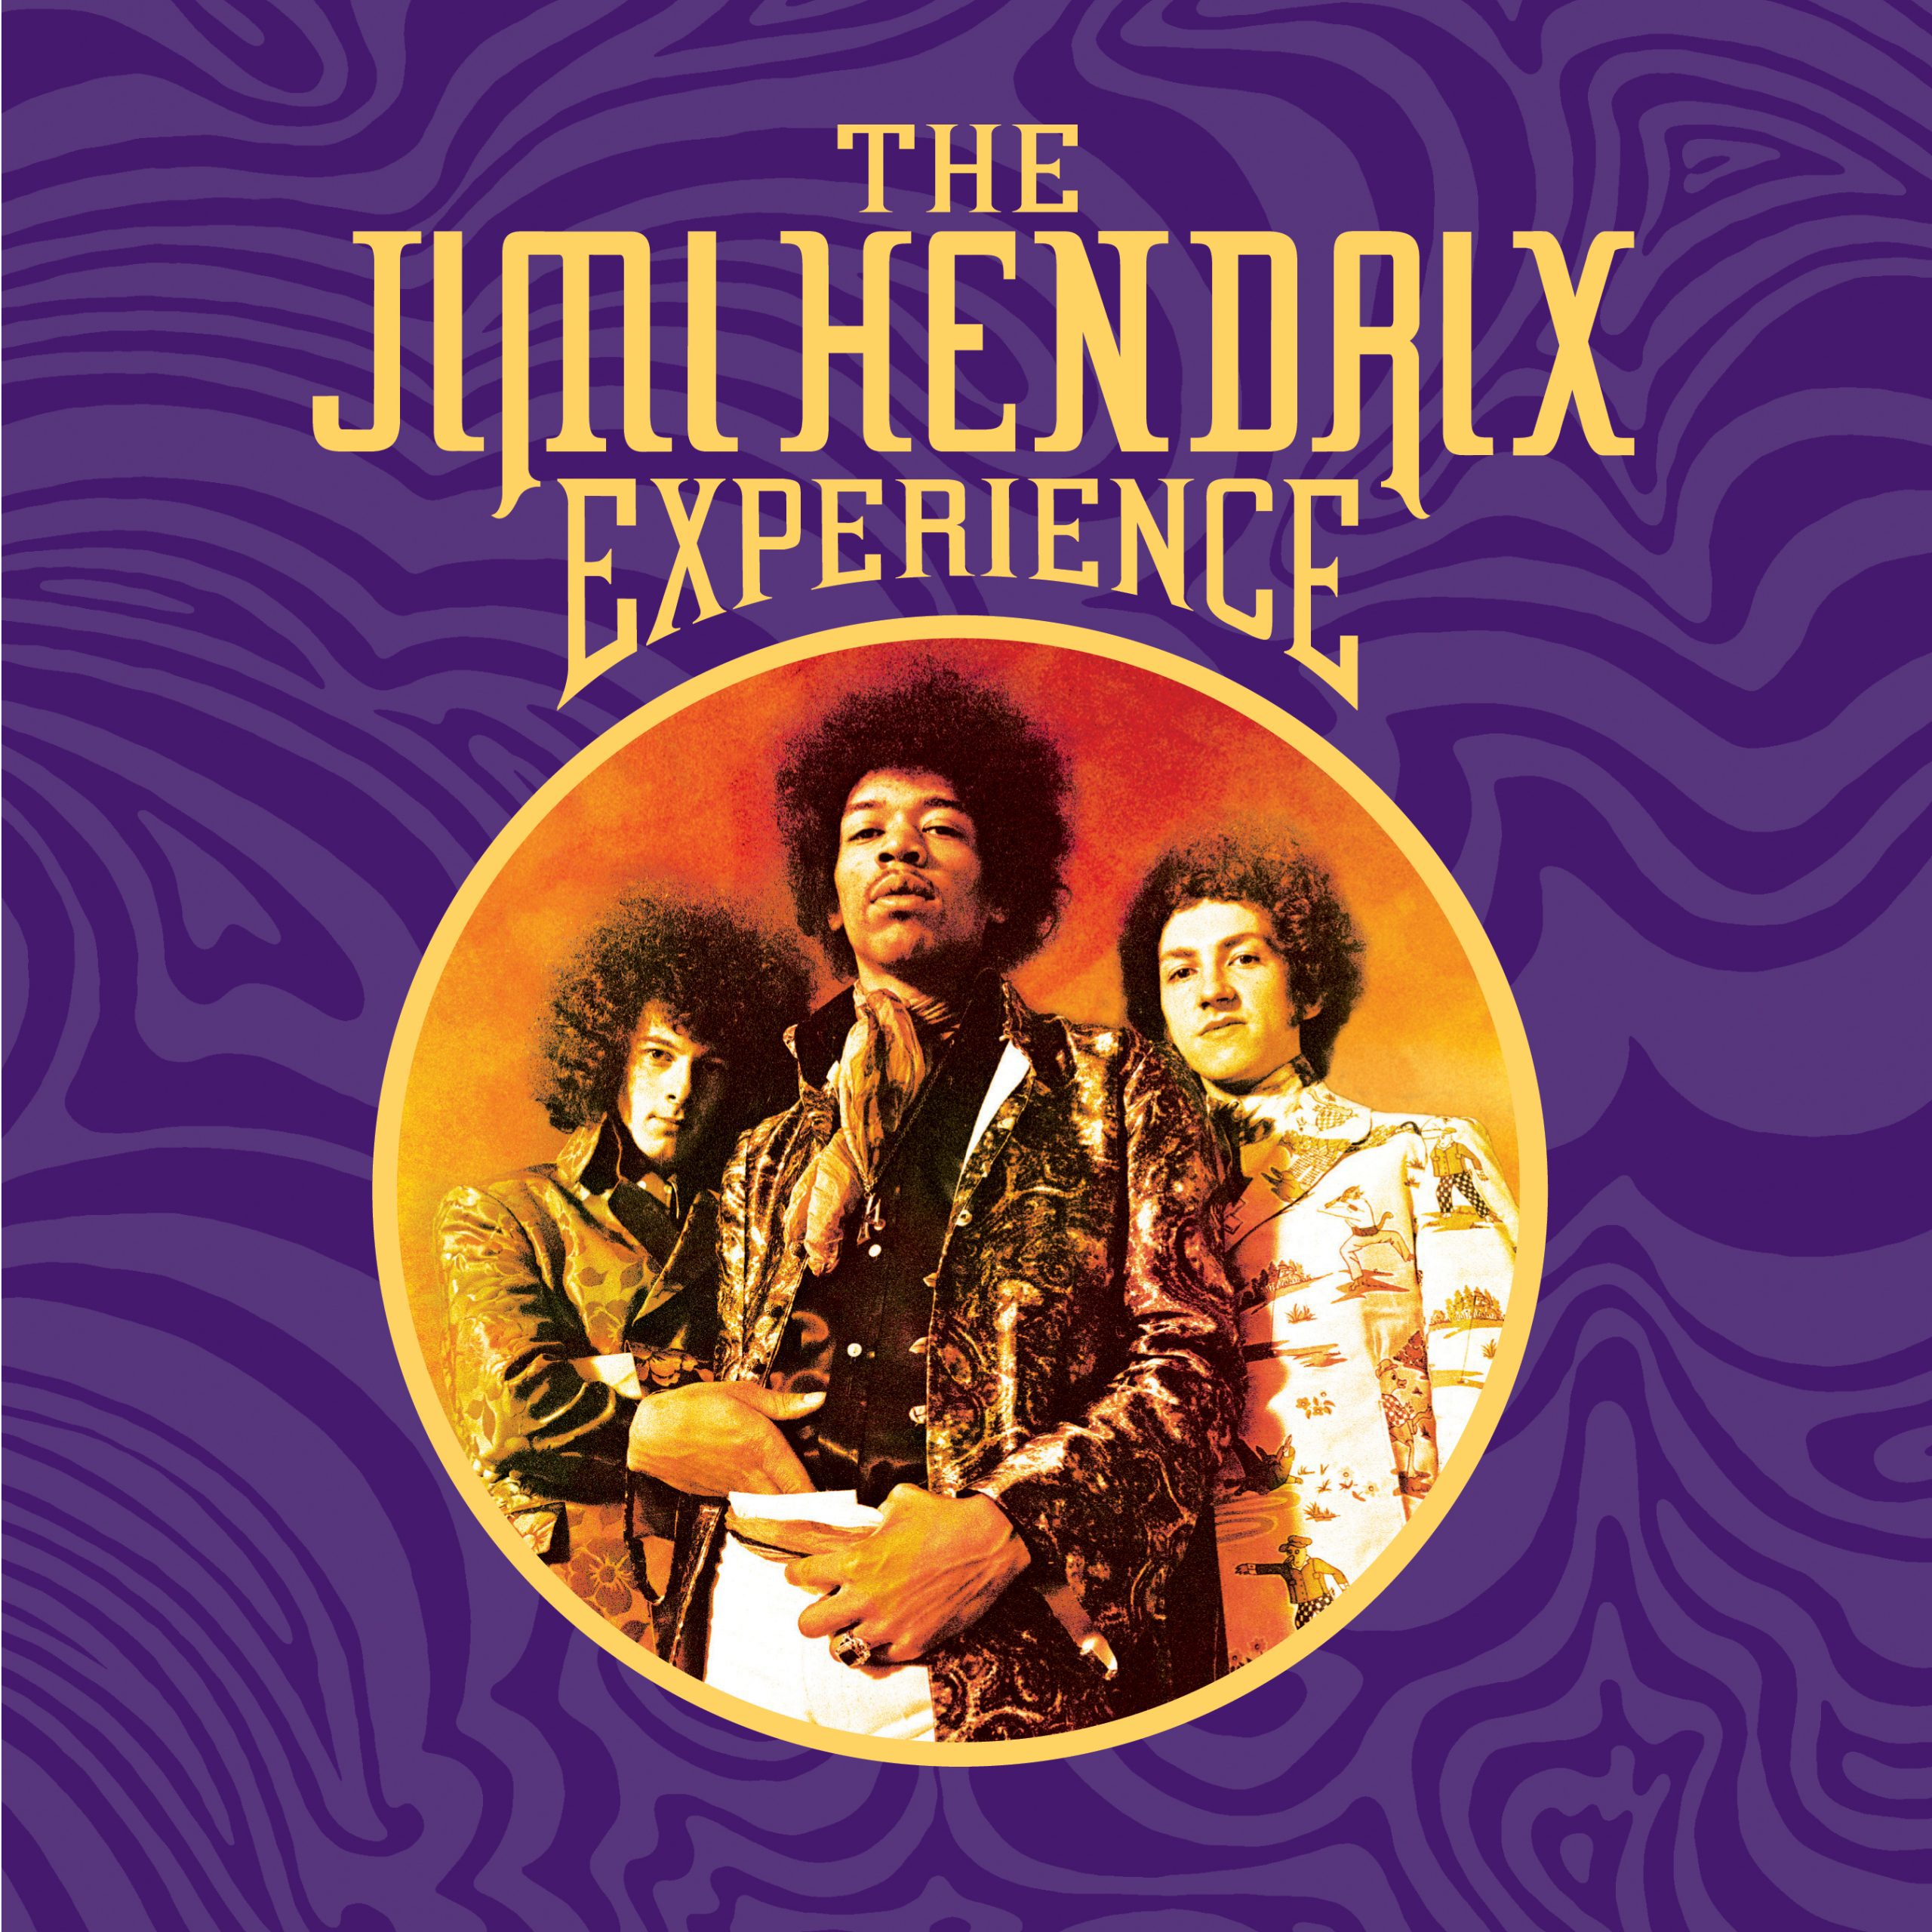 Books, Beats, and Buds: Jimi Hendrix’s ‘Purple Haze’